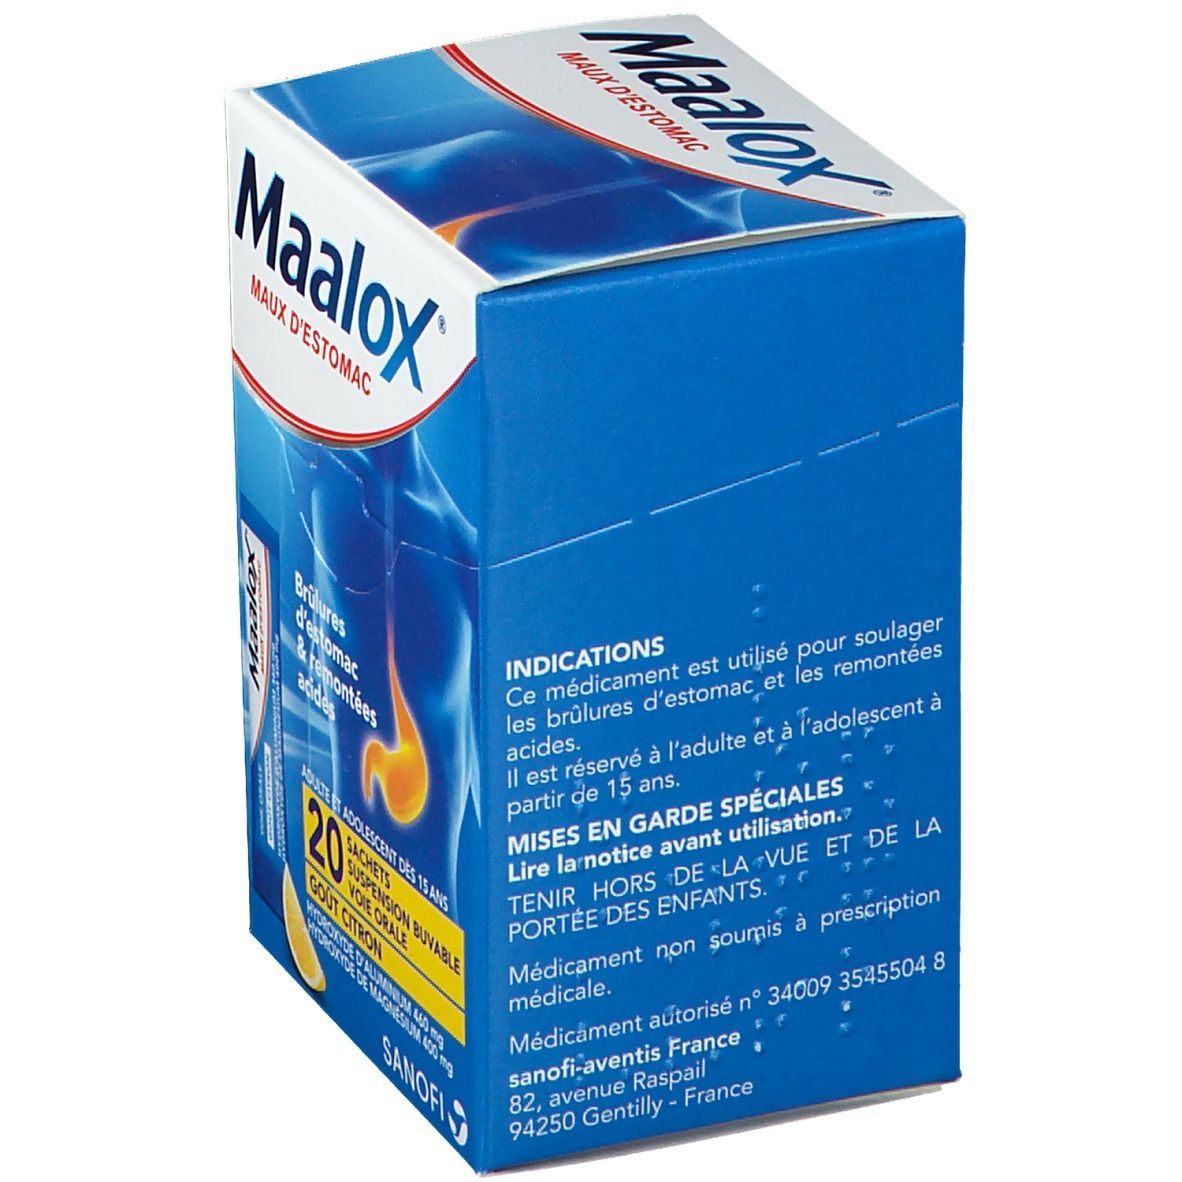 Maalox® Maux d'Estomac